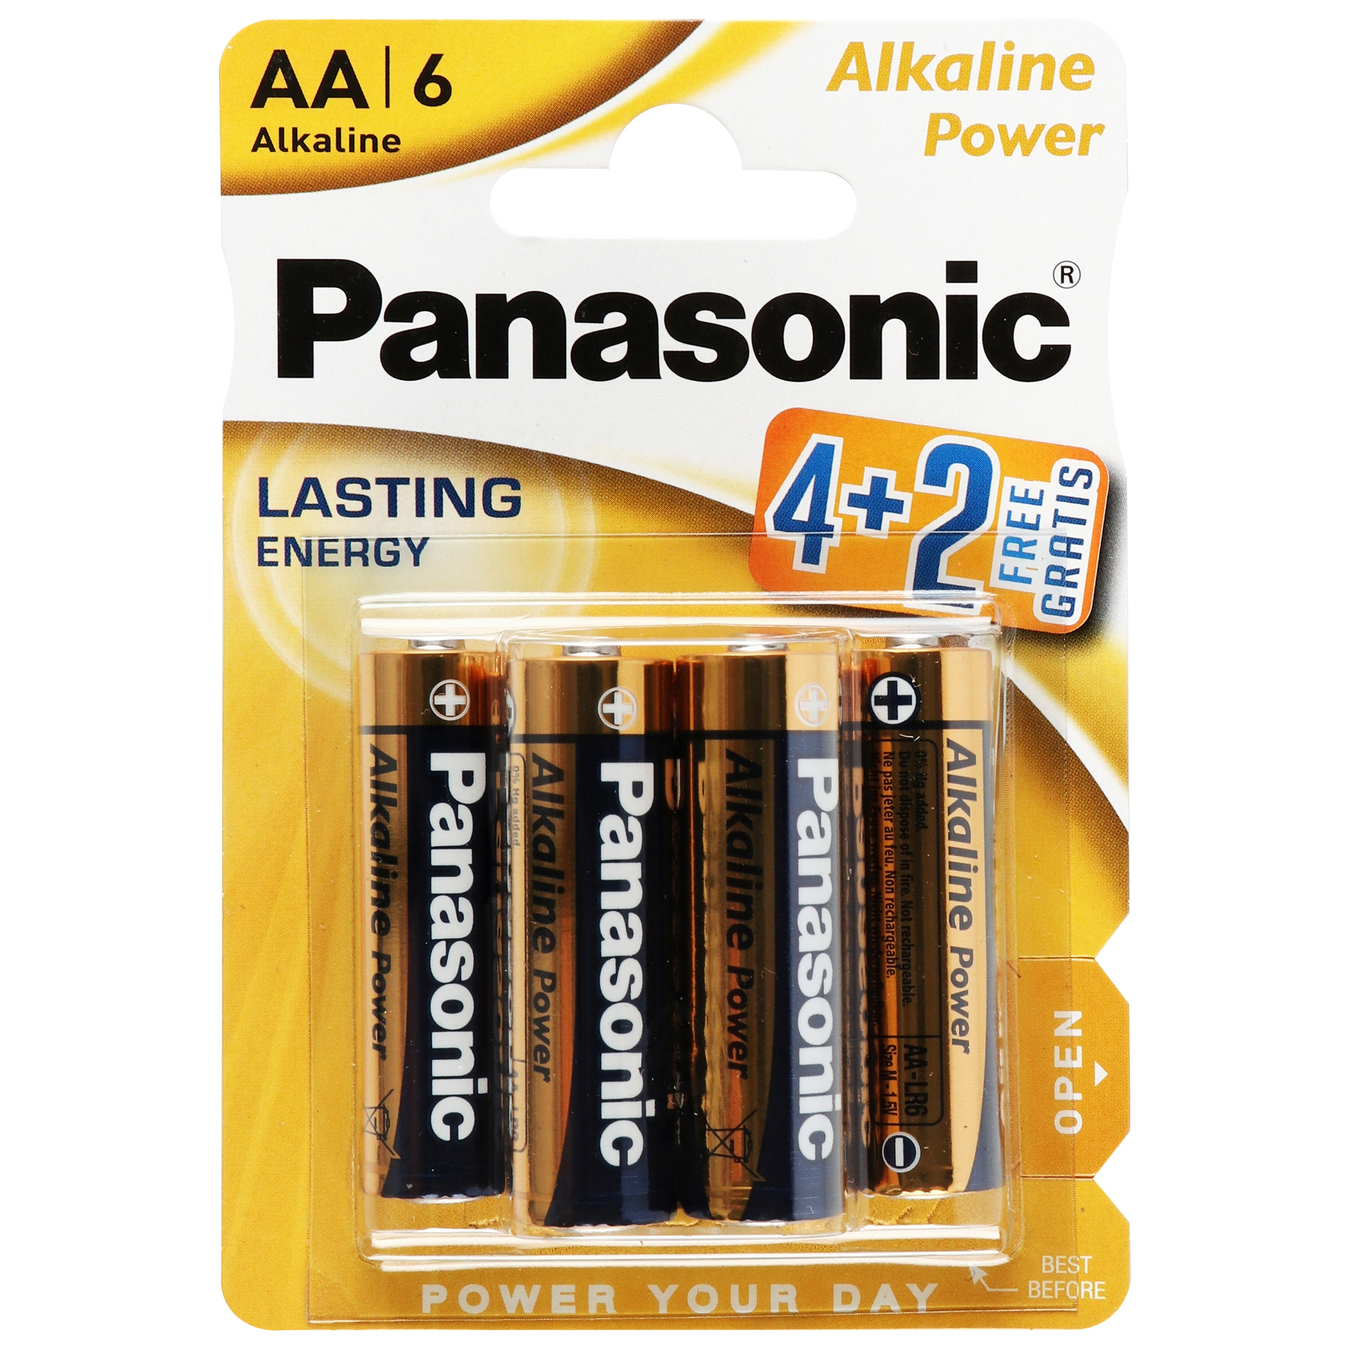 Alkaline battery Panasonic Alkaline Power AA 6 pcs